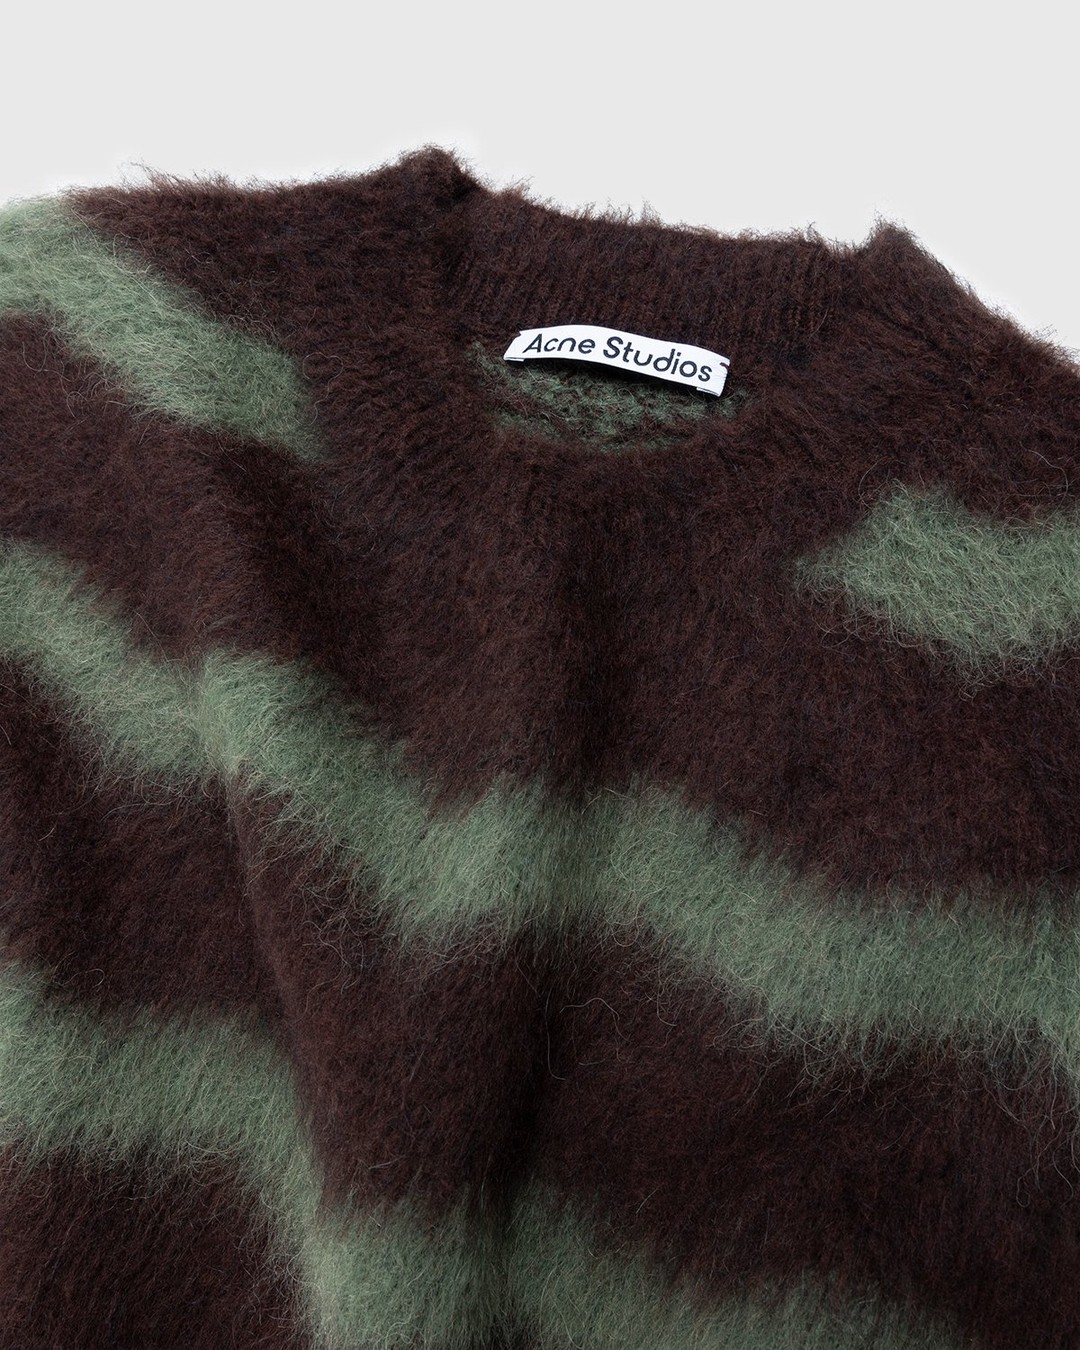 Acne Studios – Striped Fuzzy Sweater Brown/Military Green - Crewnecks - Brown - Image 3